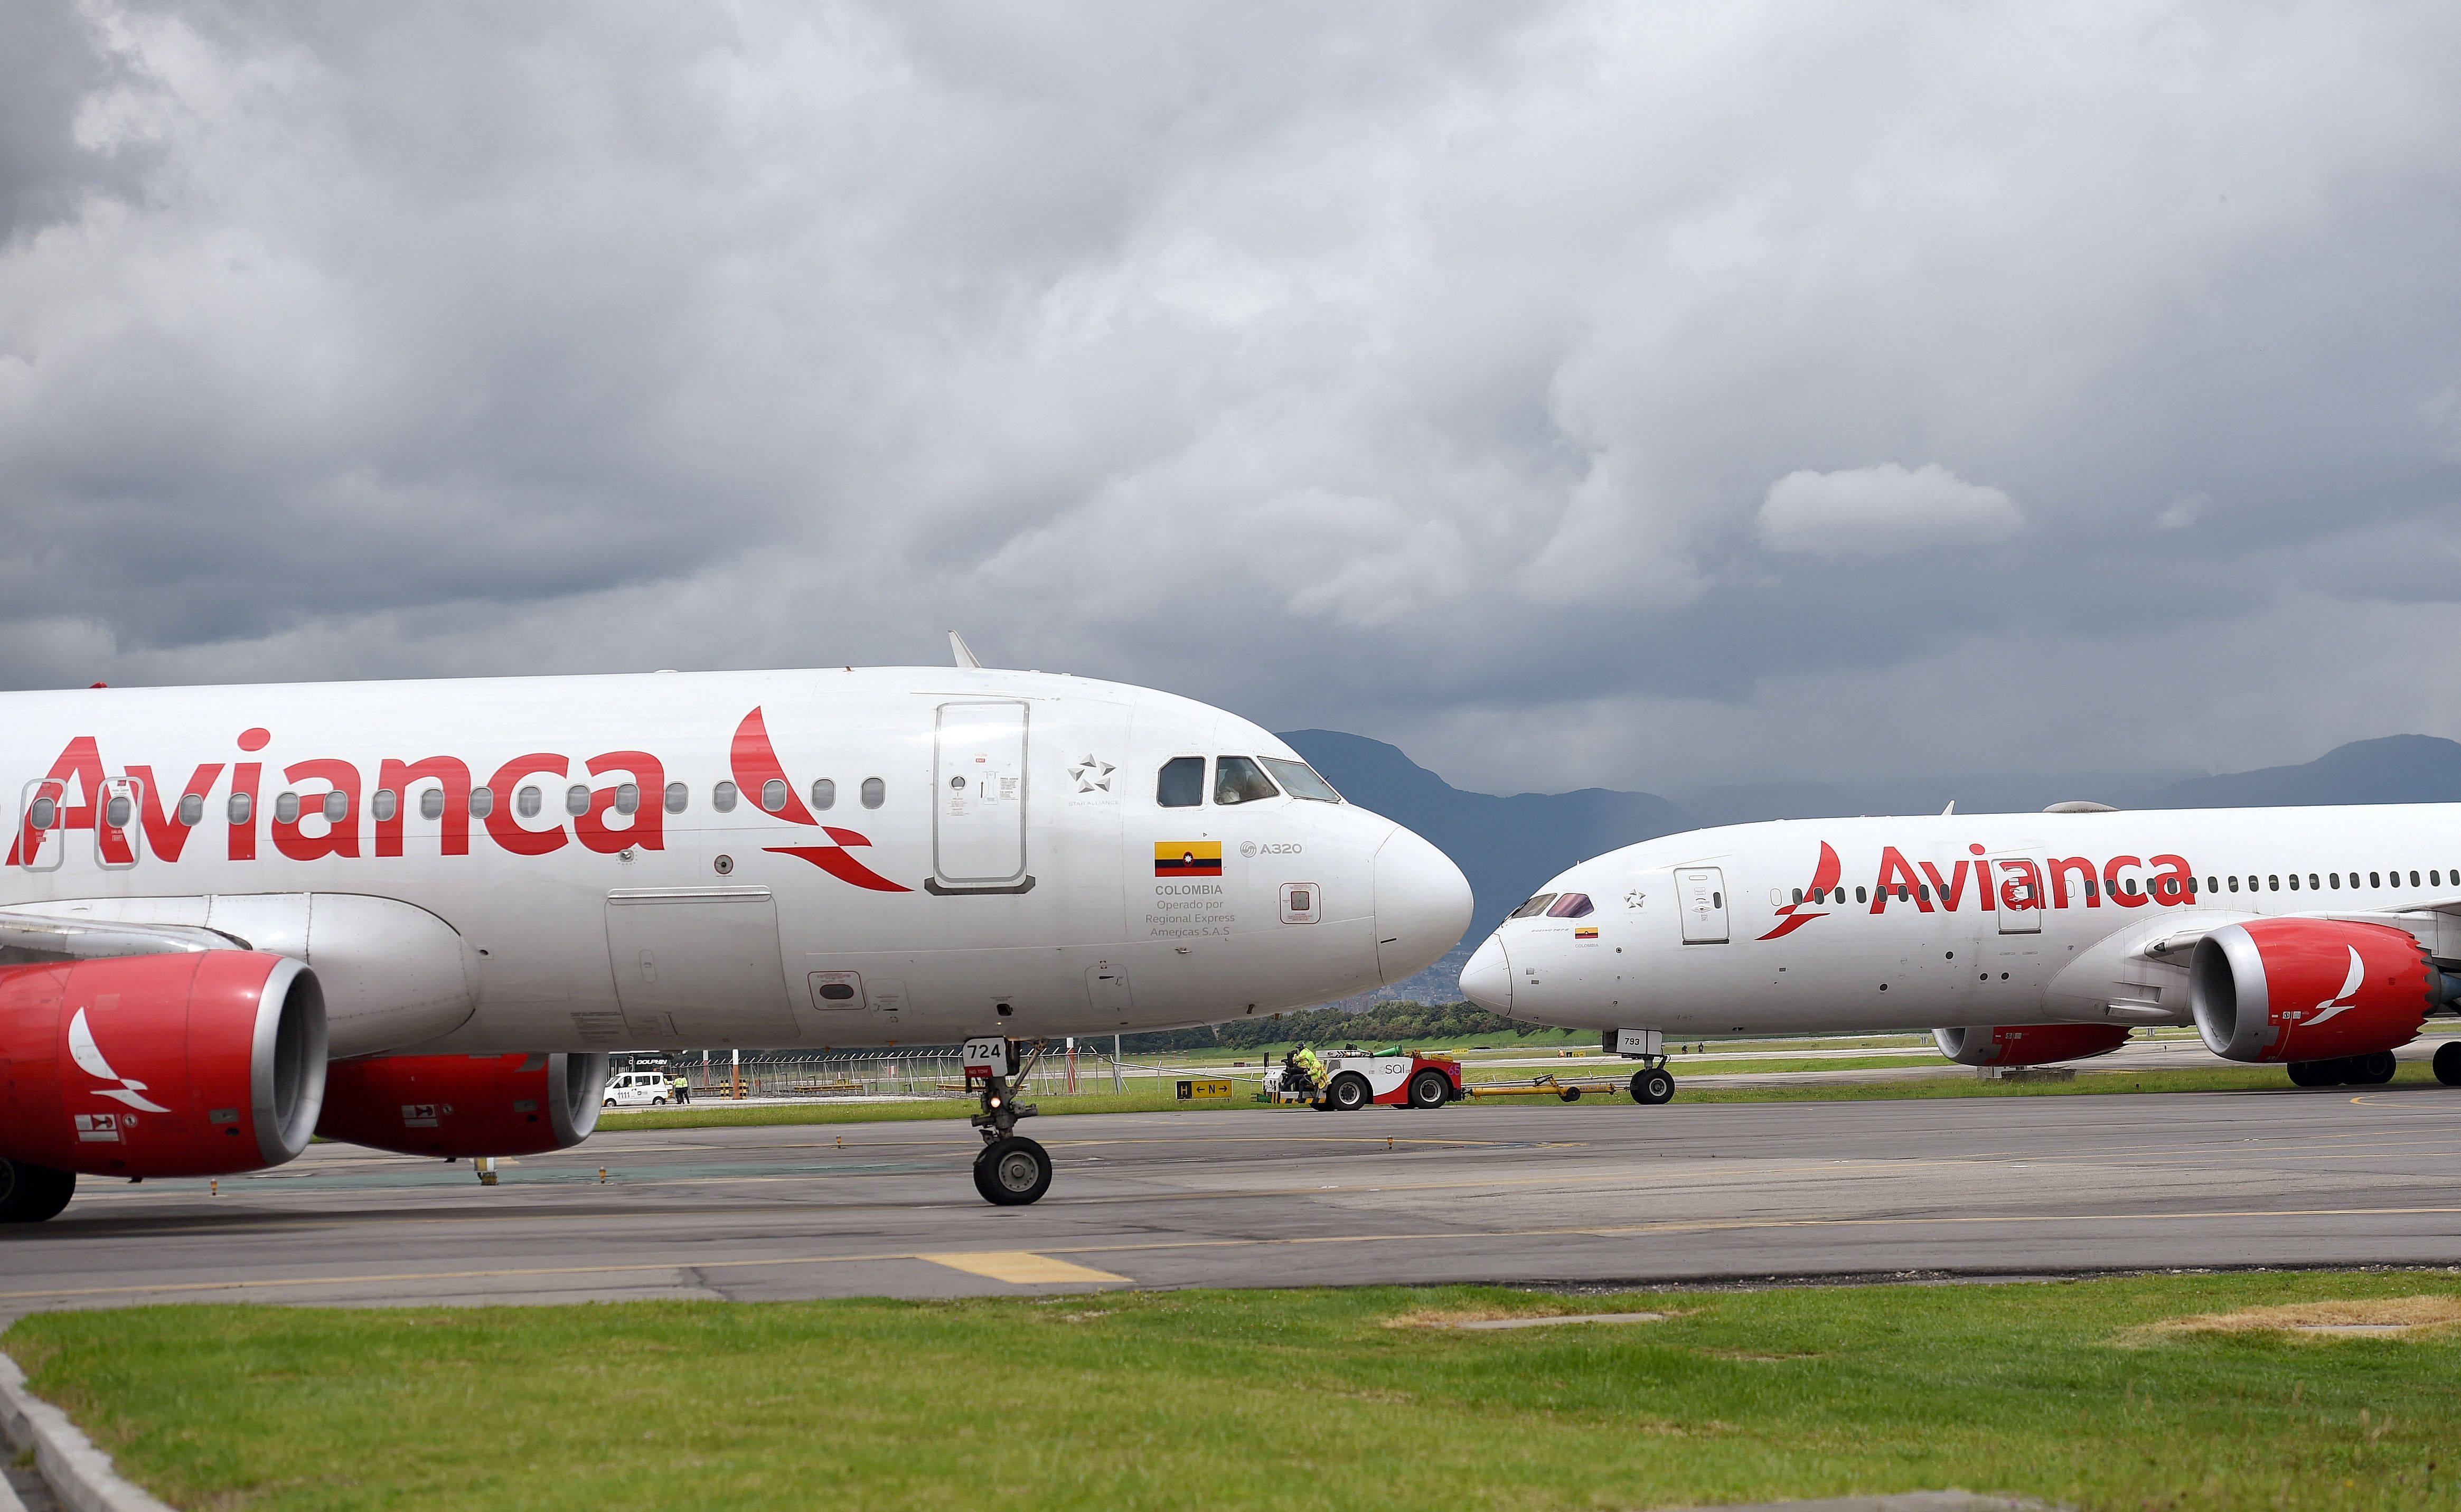 Avianca planes taxing at El Dorado International airport in Bogota